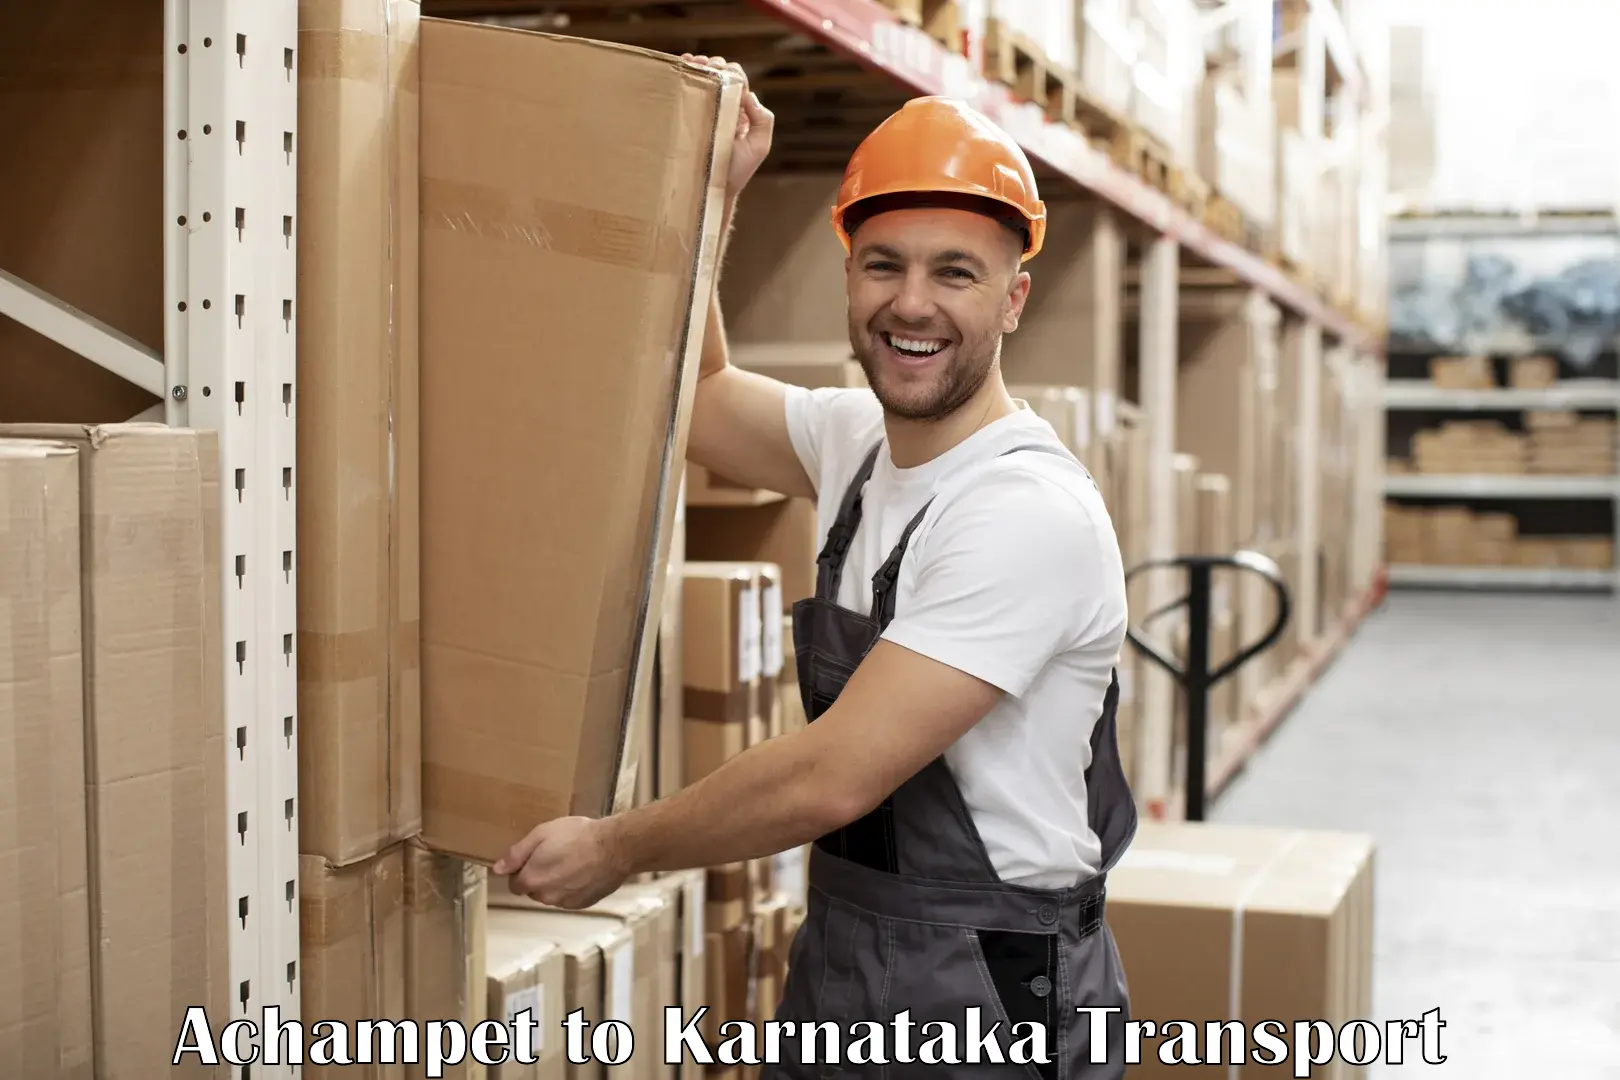 Truck transport companies in India Achampet to Toranagallu